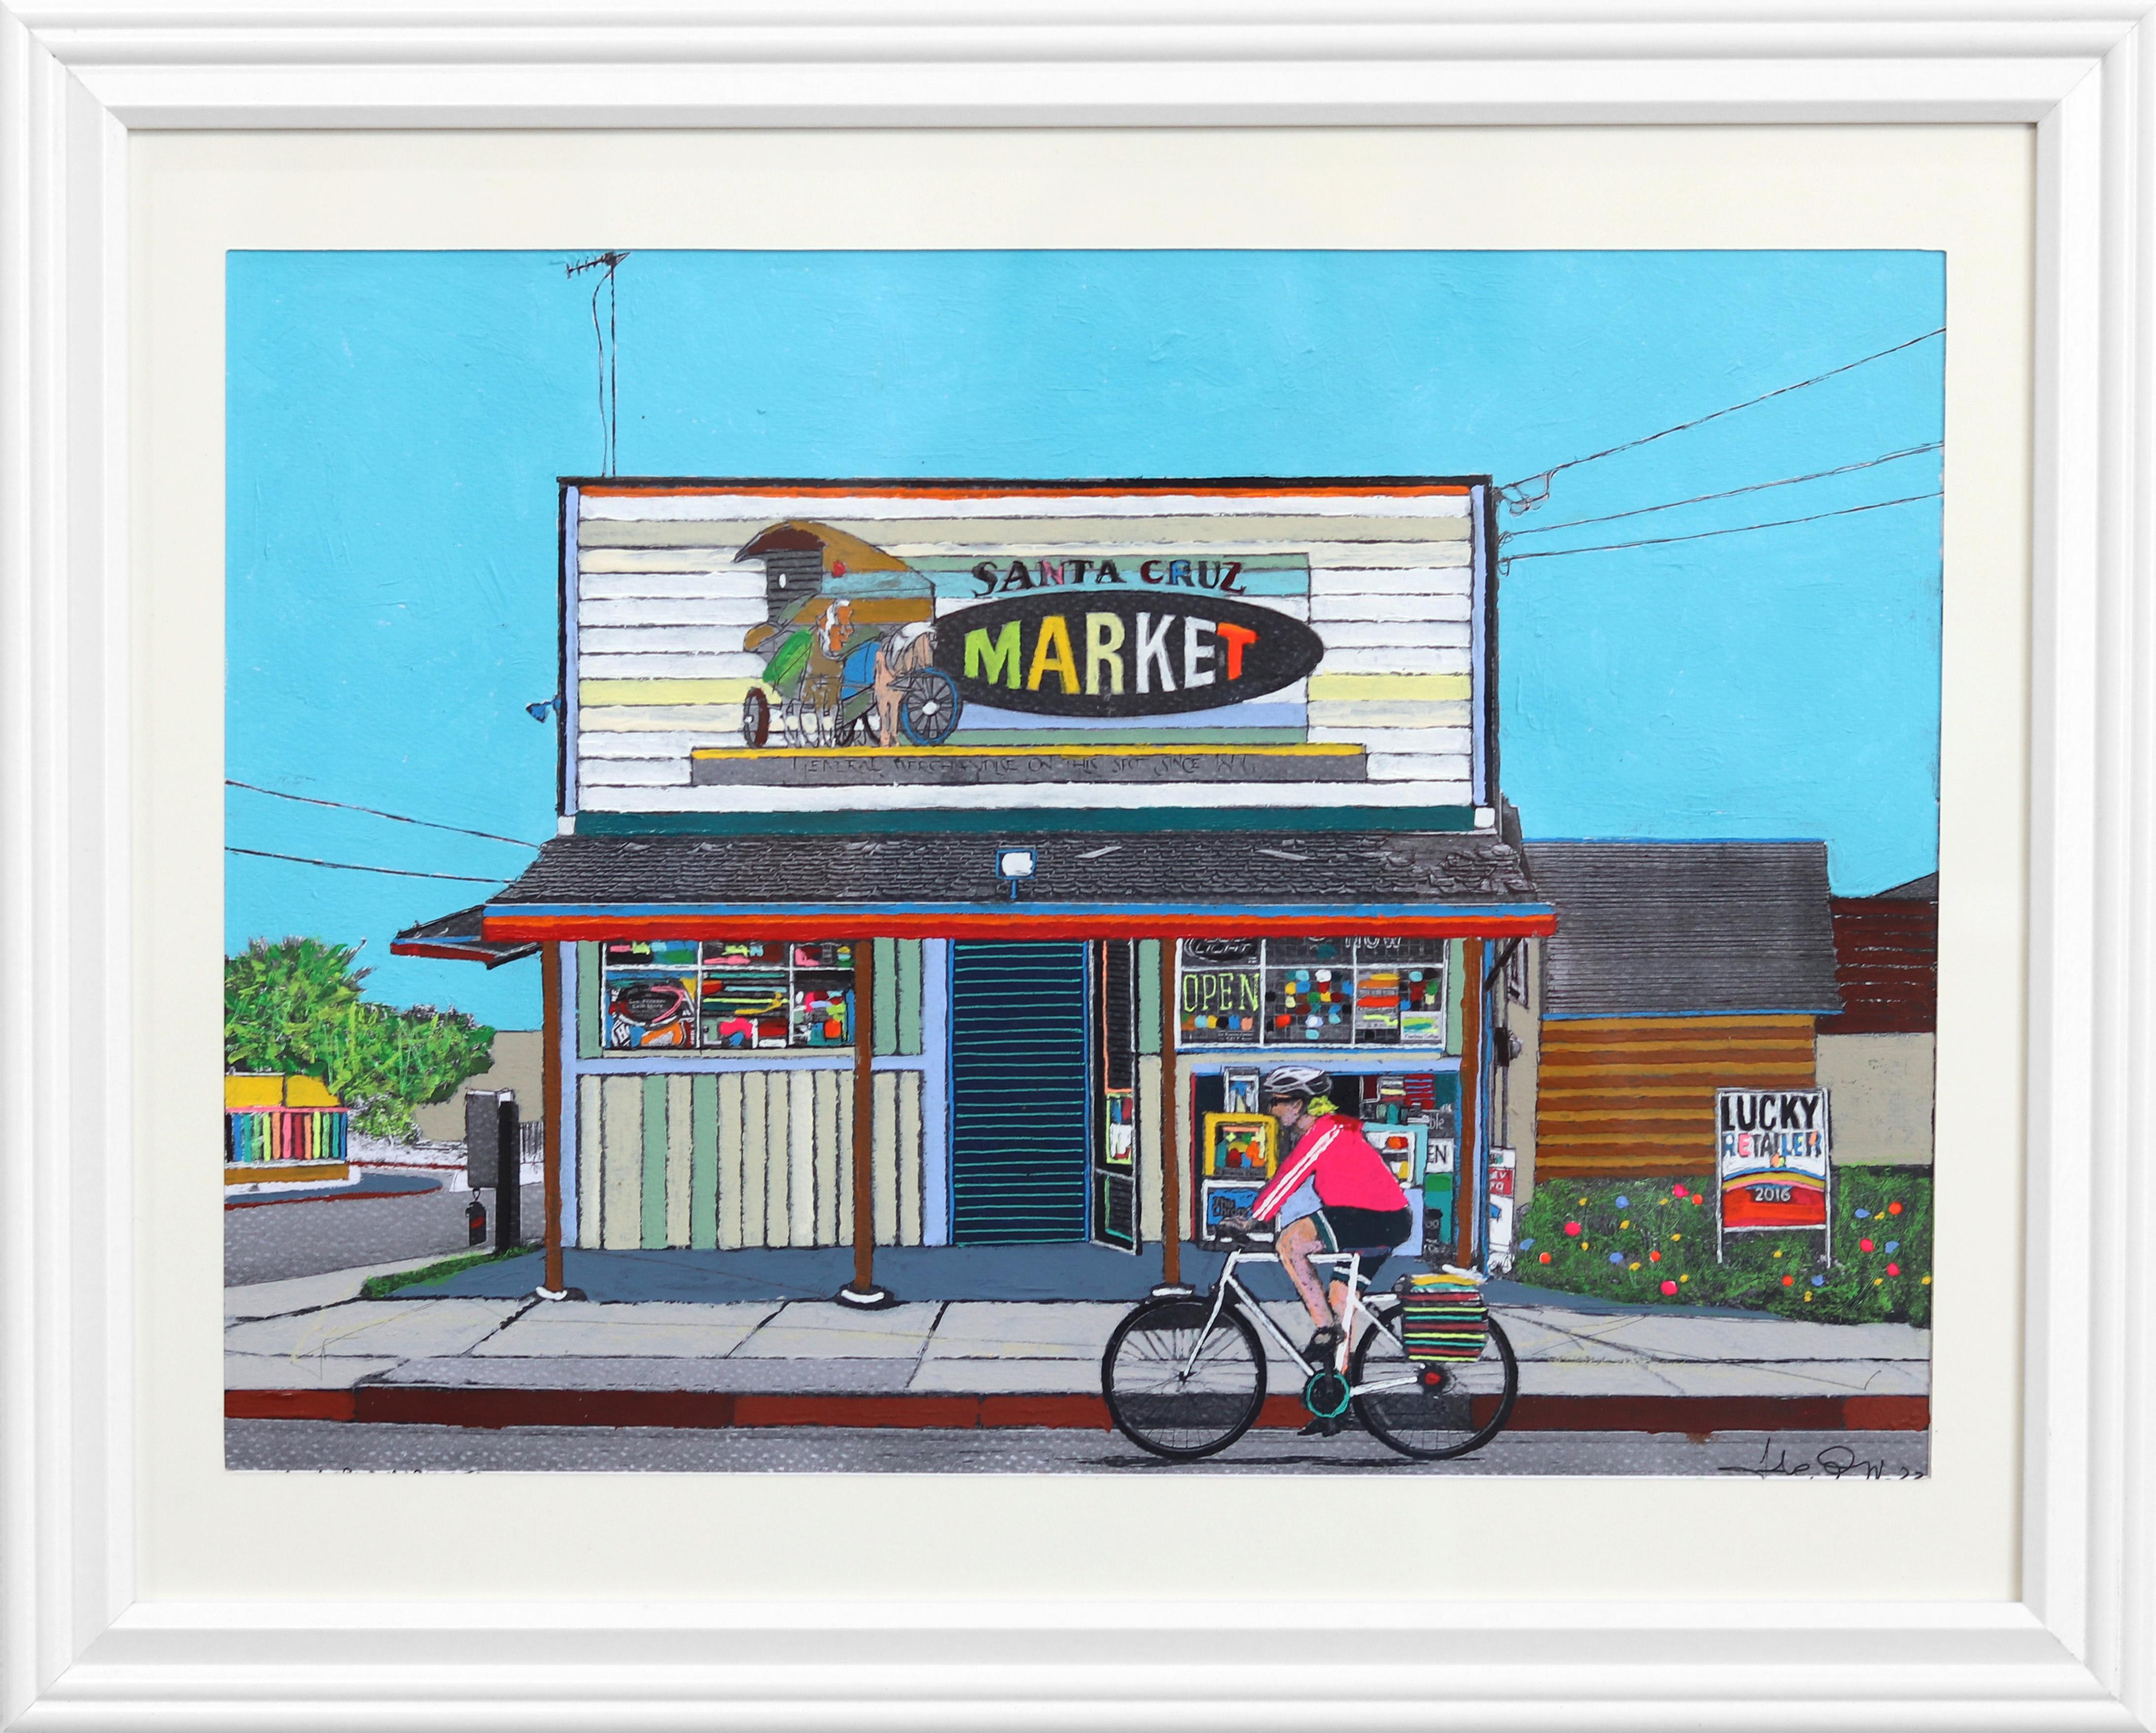 Santa Cruz Market - Framed Original Urban Colorful Authentic Environment Art - Mixed Media Art by Fabio Coruzzi